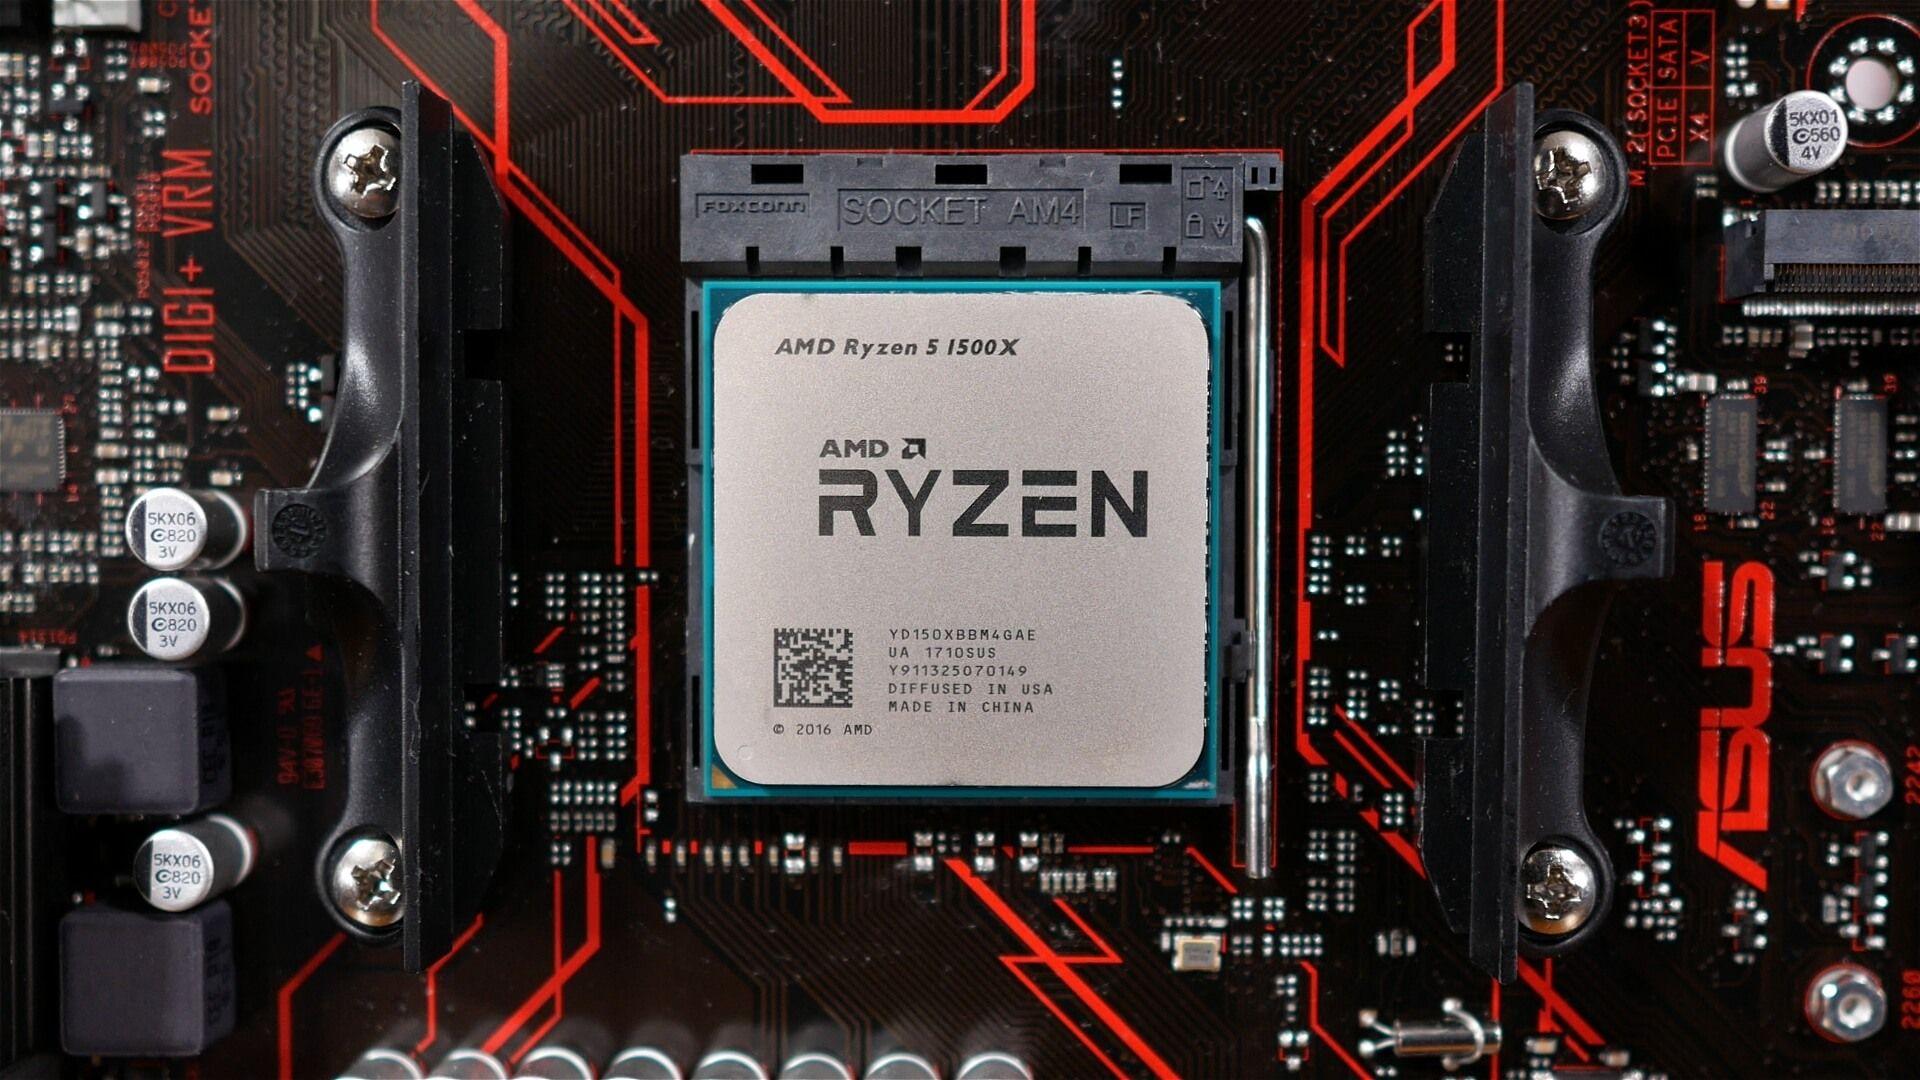 AMD Ryzen and EPYC platforms at risk: More than a dozen critical